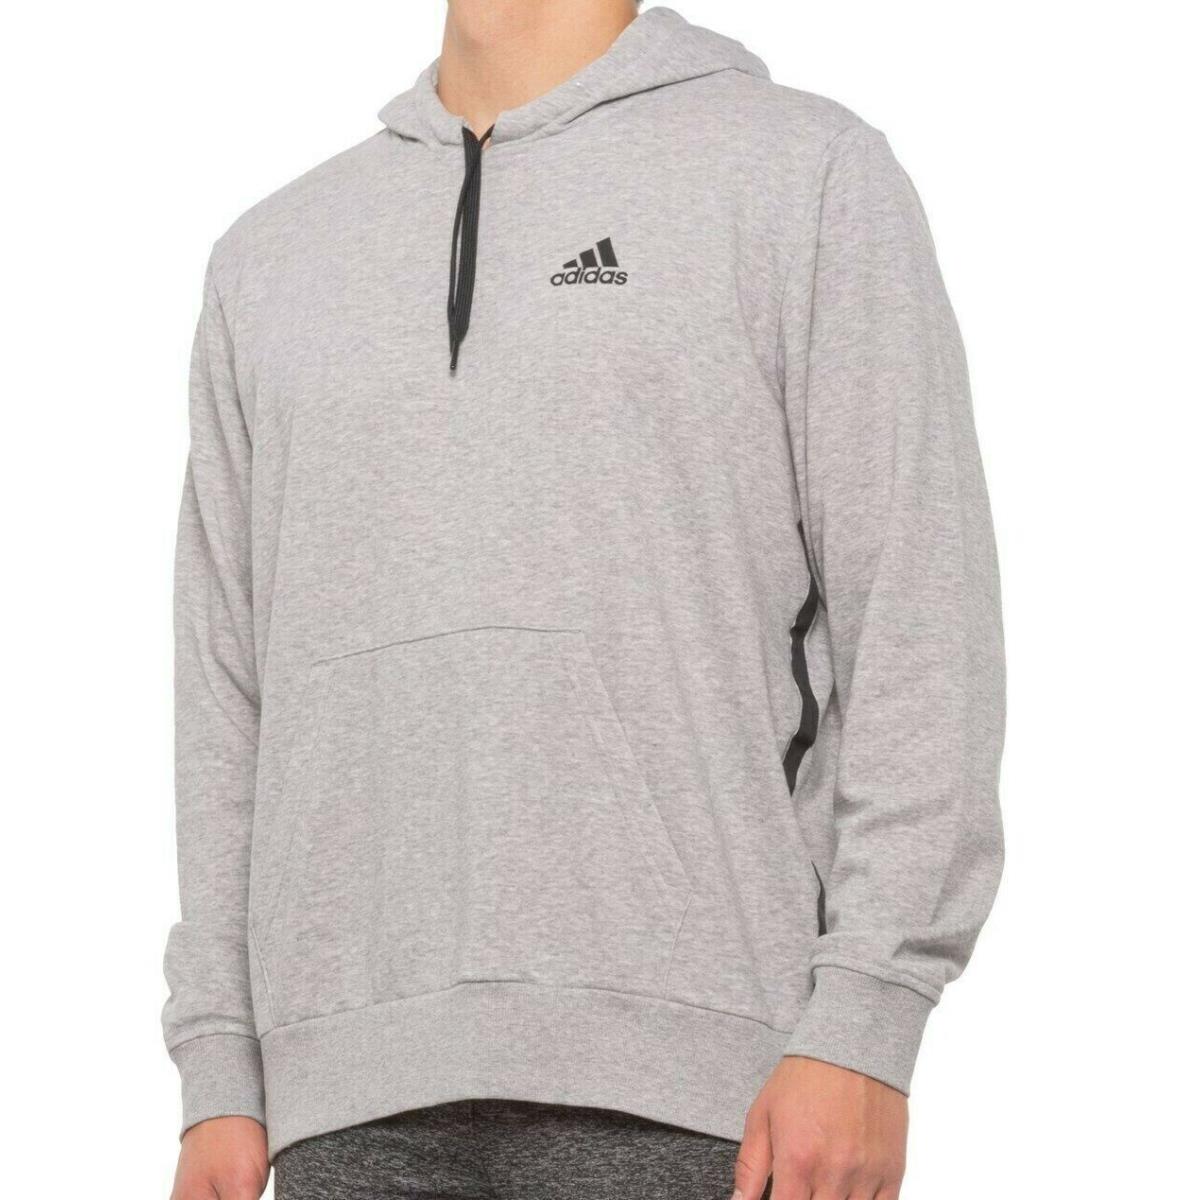 Adidas clothing  - Gray 7